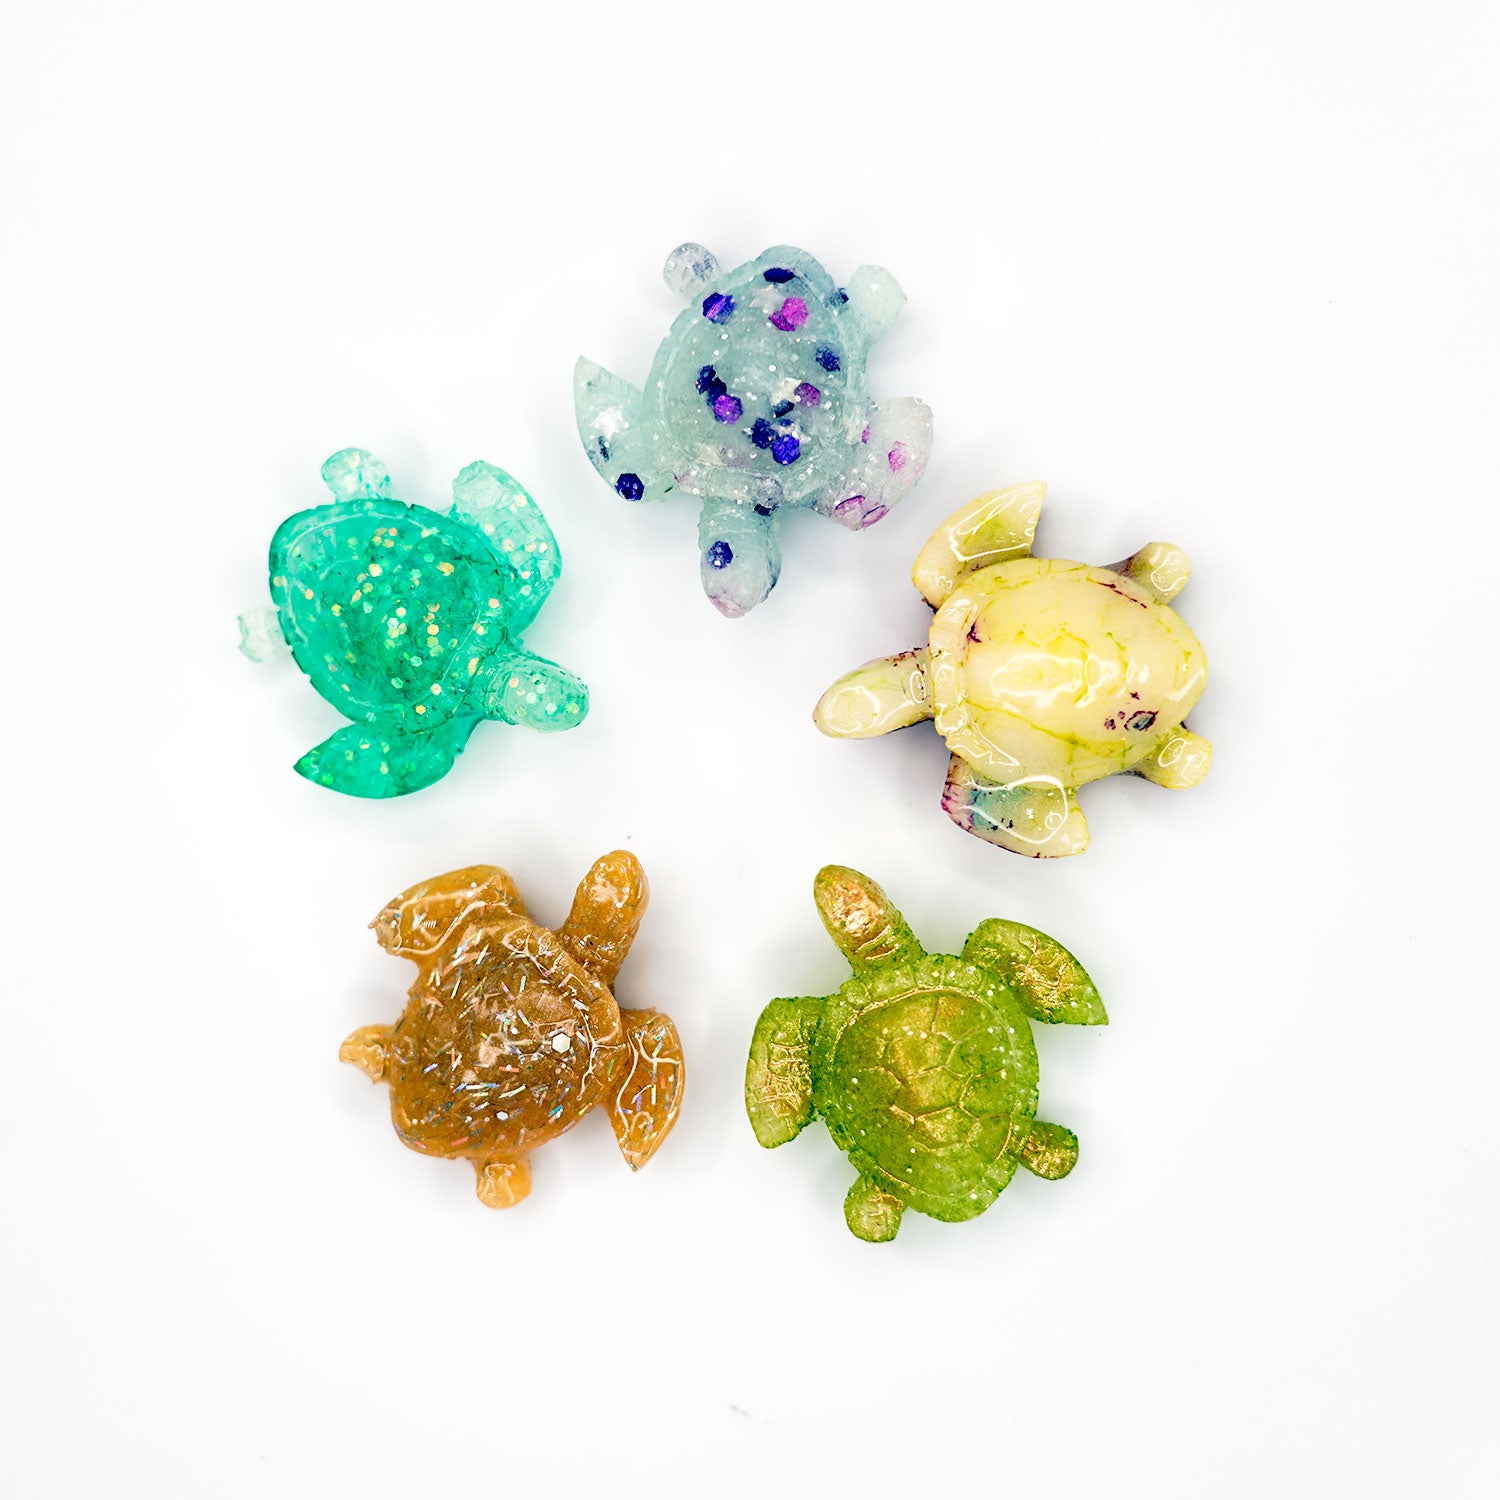 Mini Polished Glittered Honu Turtle Handmade Resin Fridge Magnets